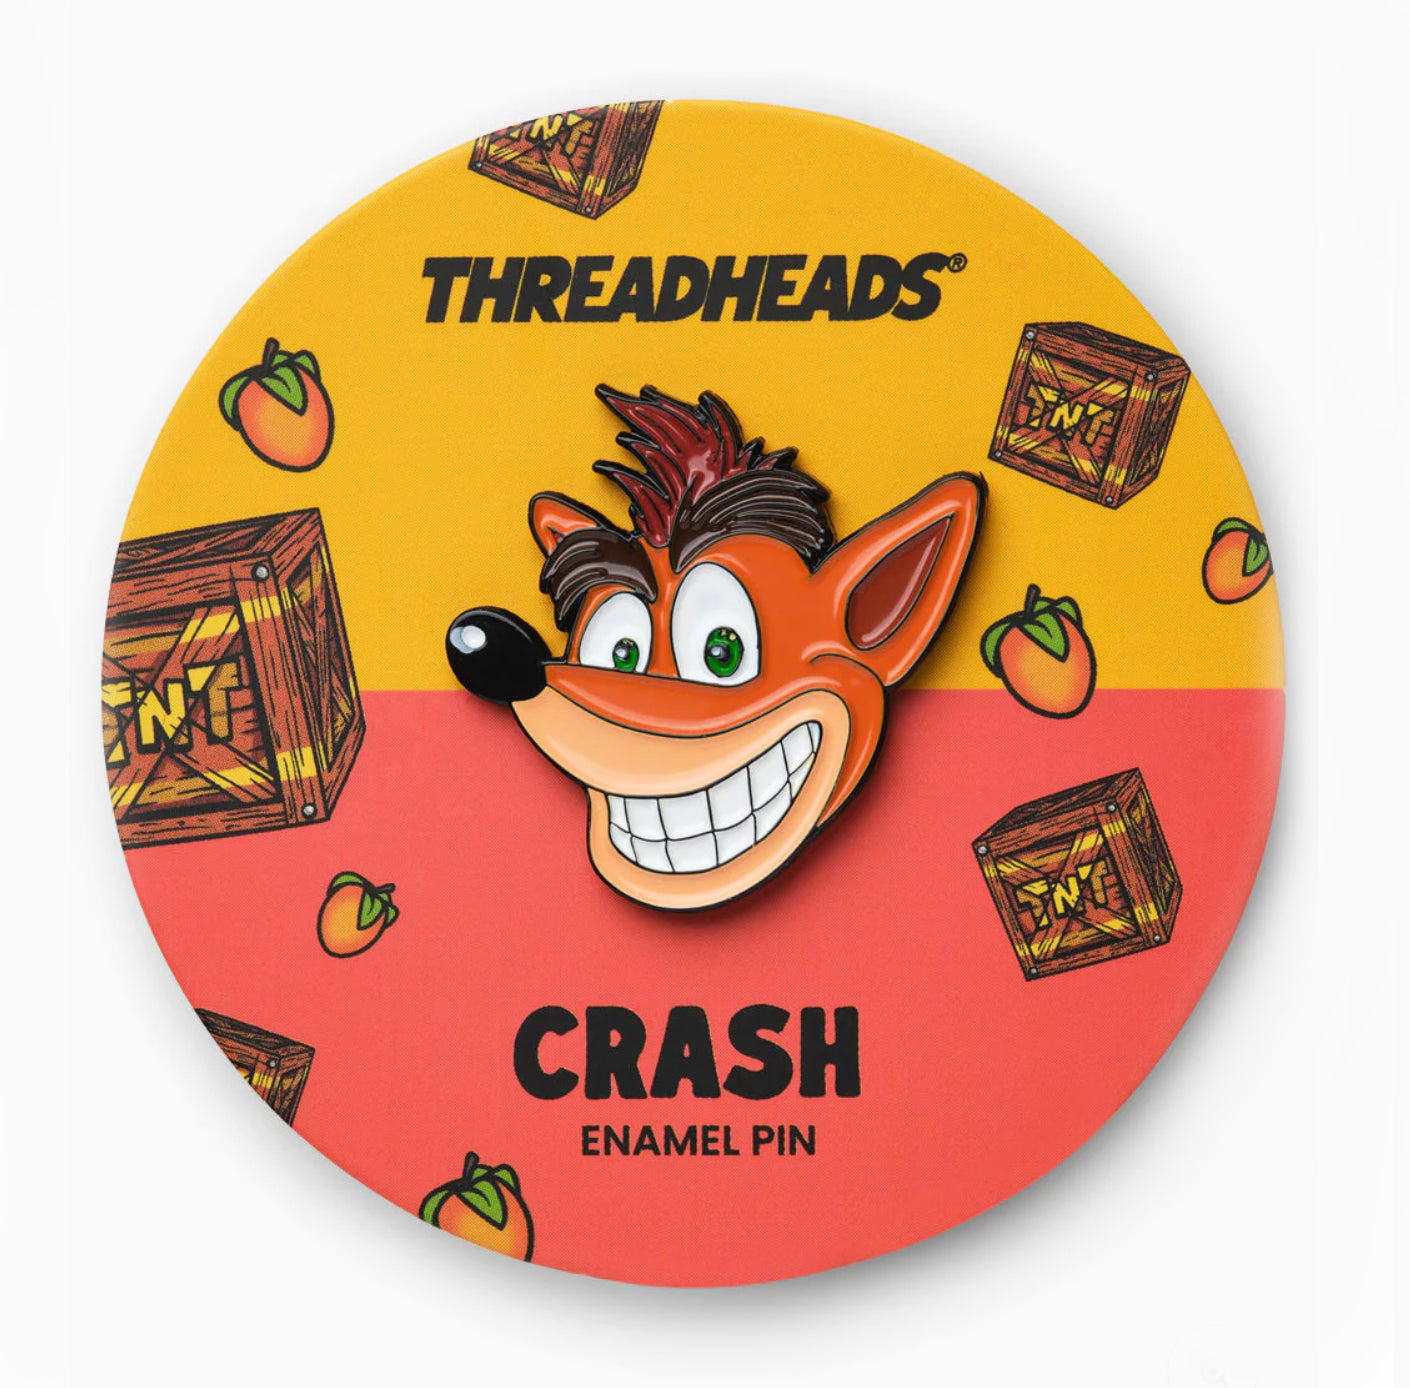 Threadheads / Crash Enamel Pin